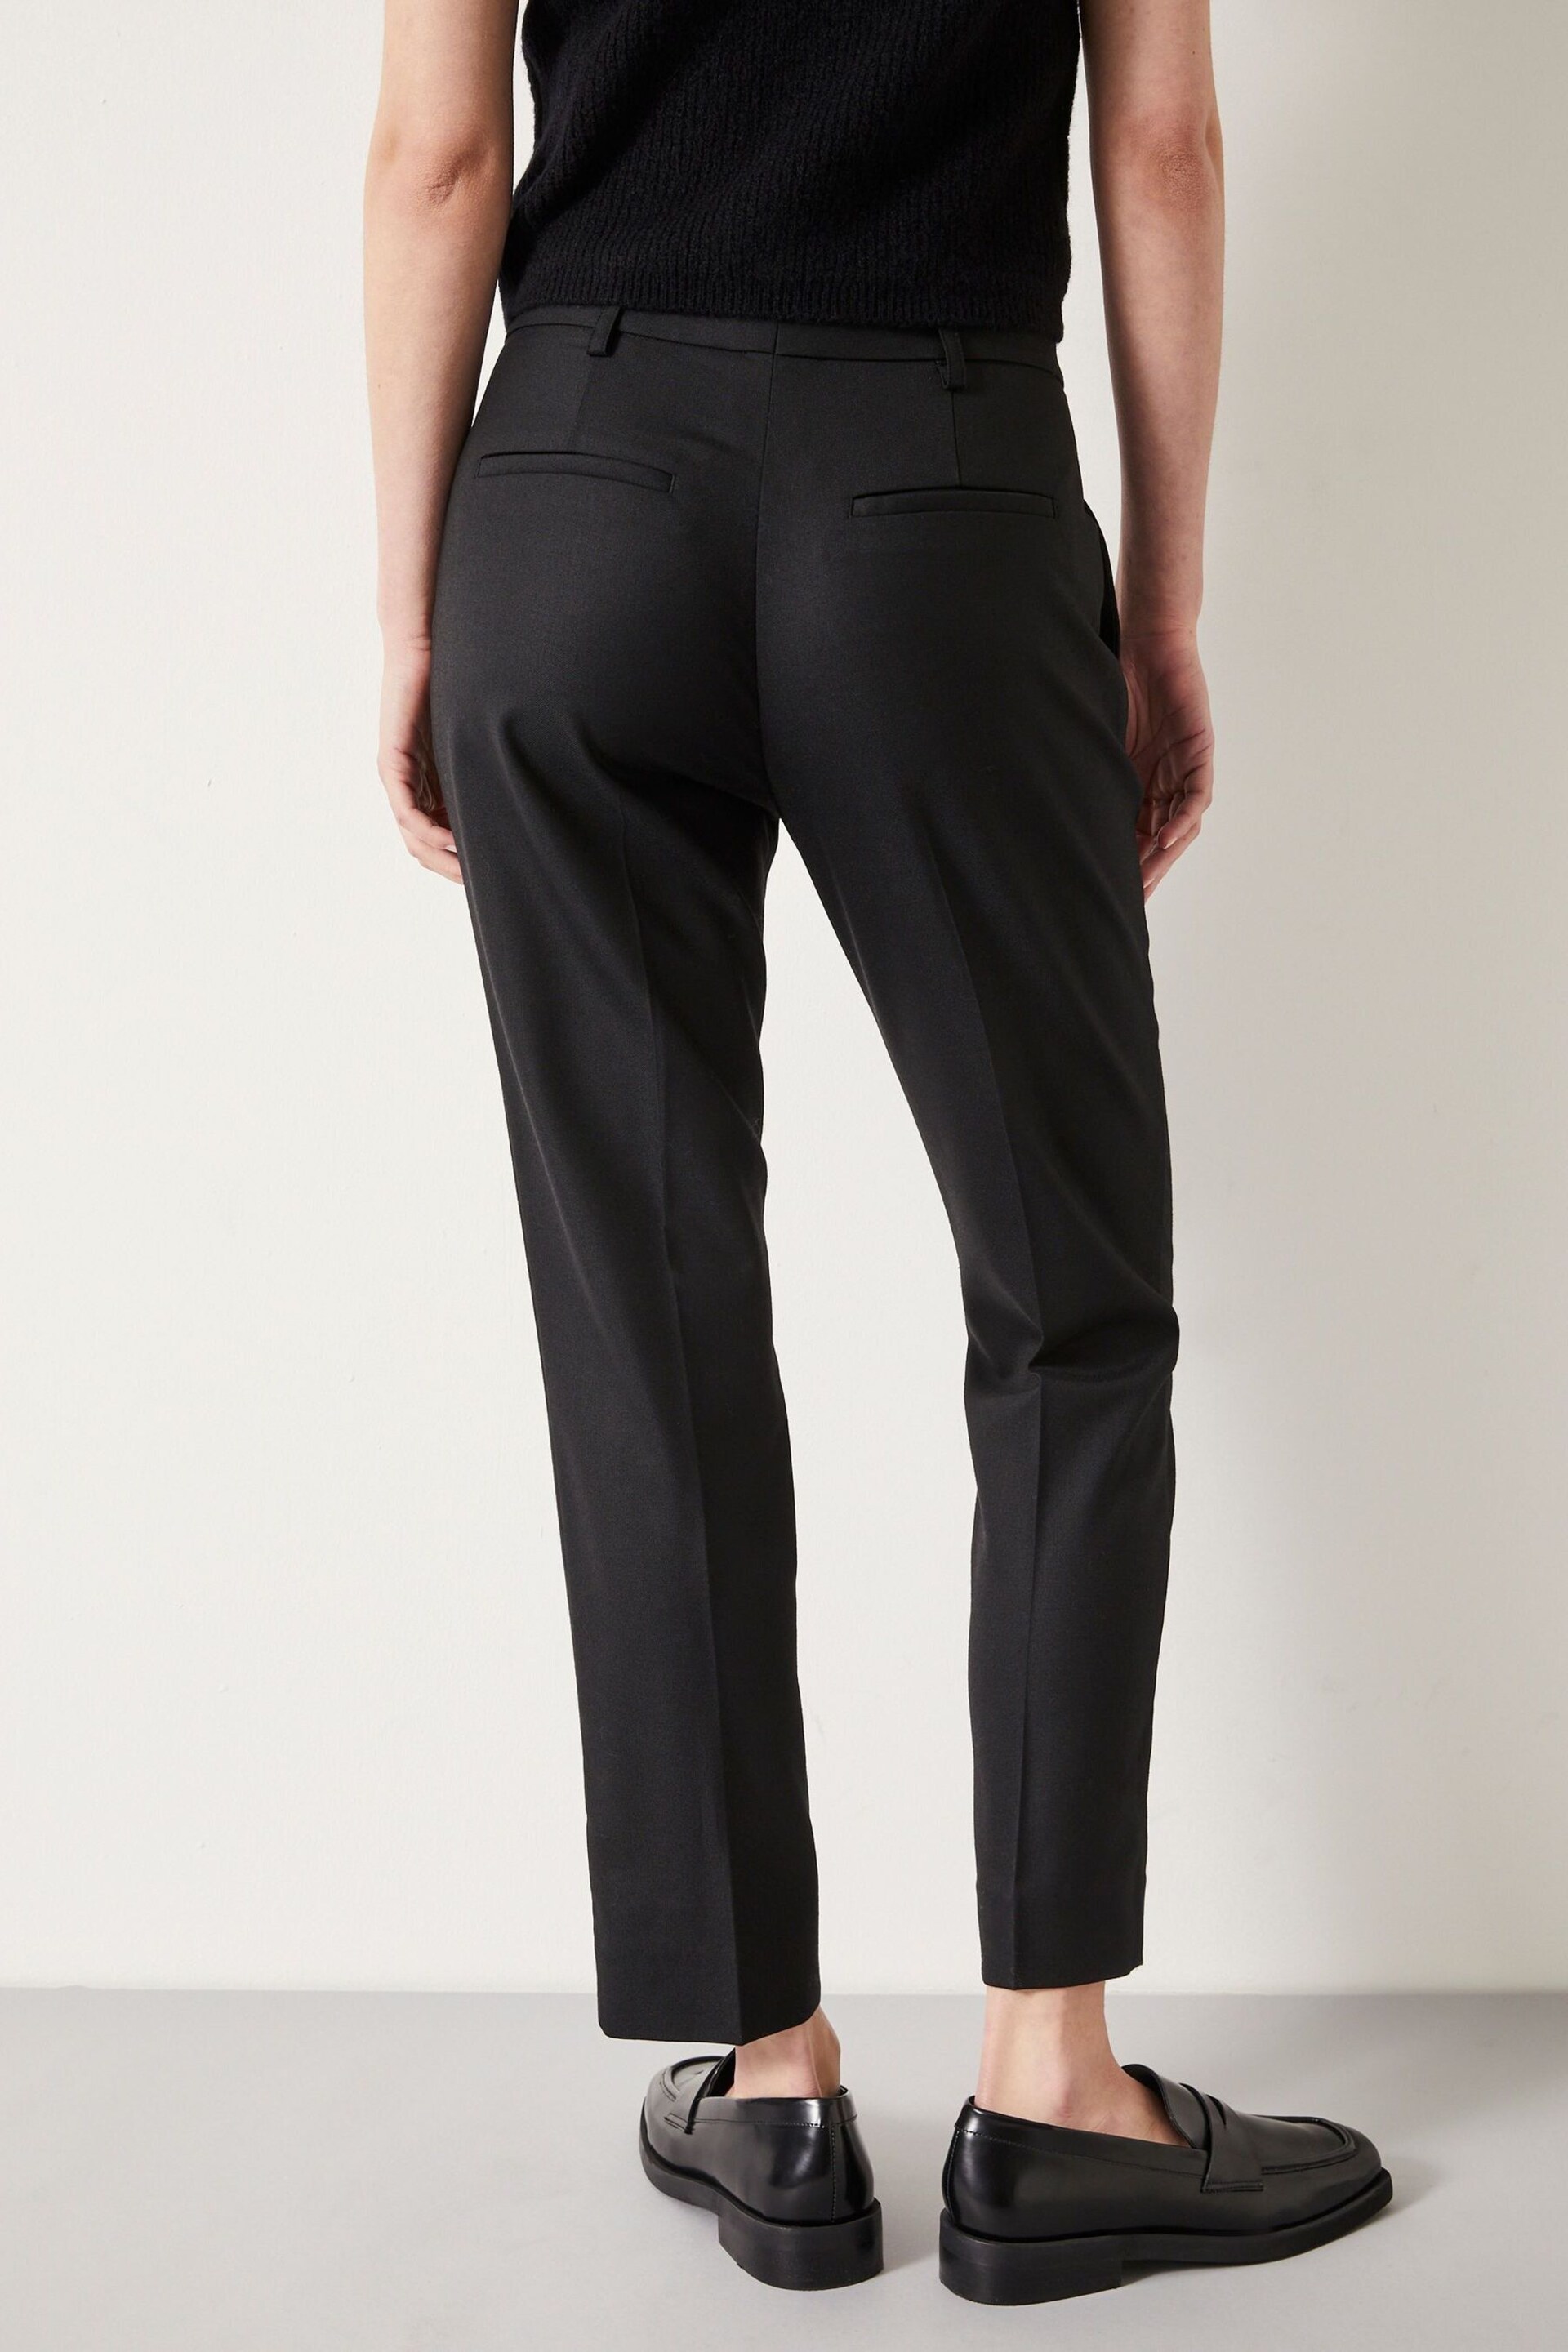 Hush Black Amanda Cropped Suit Trousers - Image 2 of 5